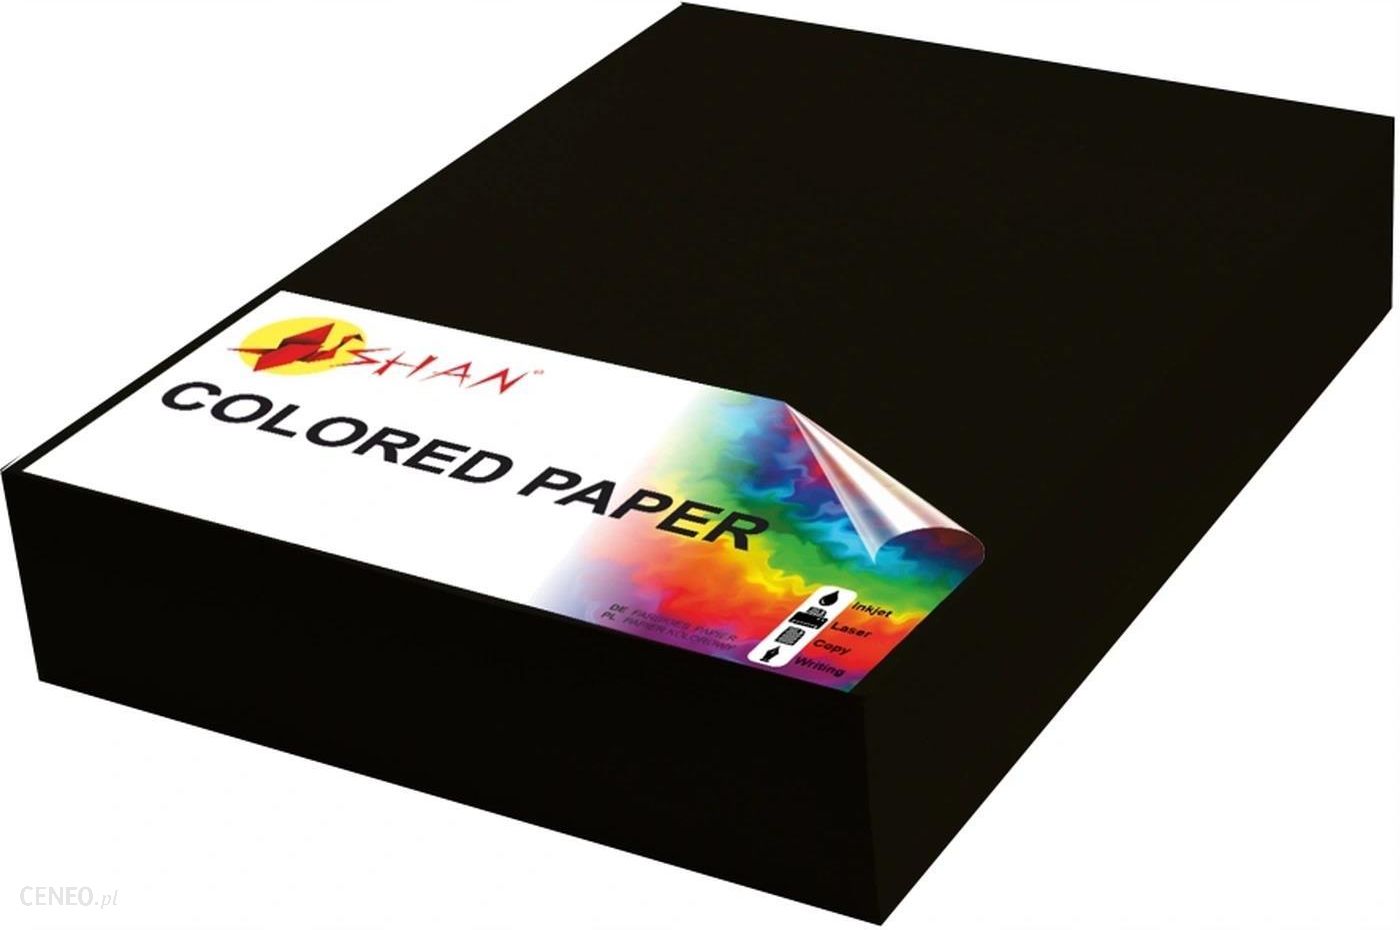 Papier kolorowy - format A3 - 500 ark. - 80 g/m2